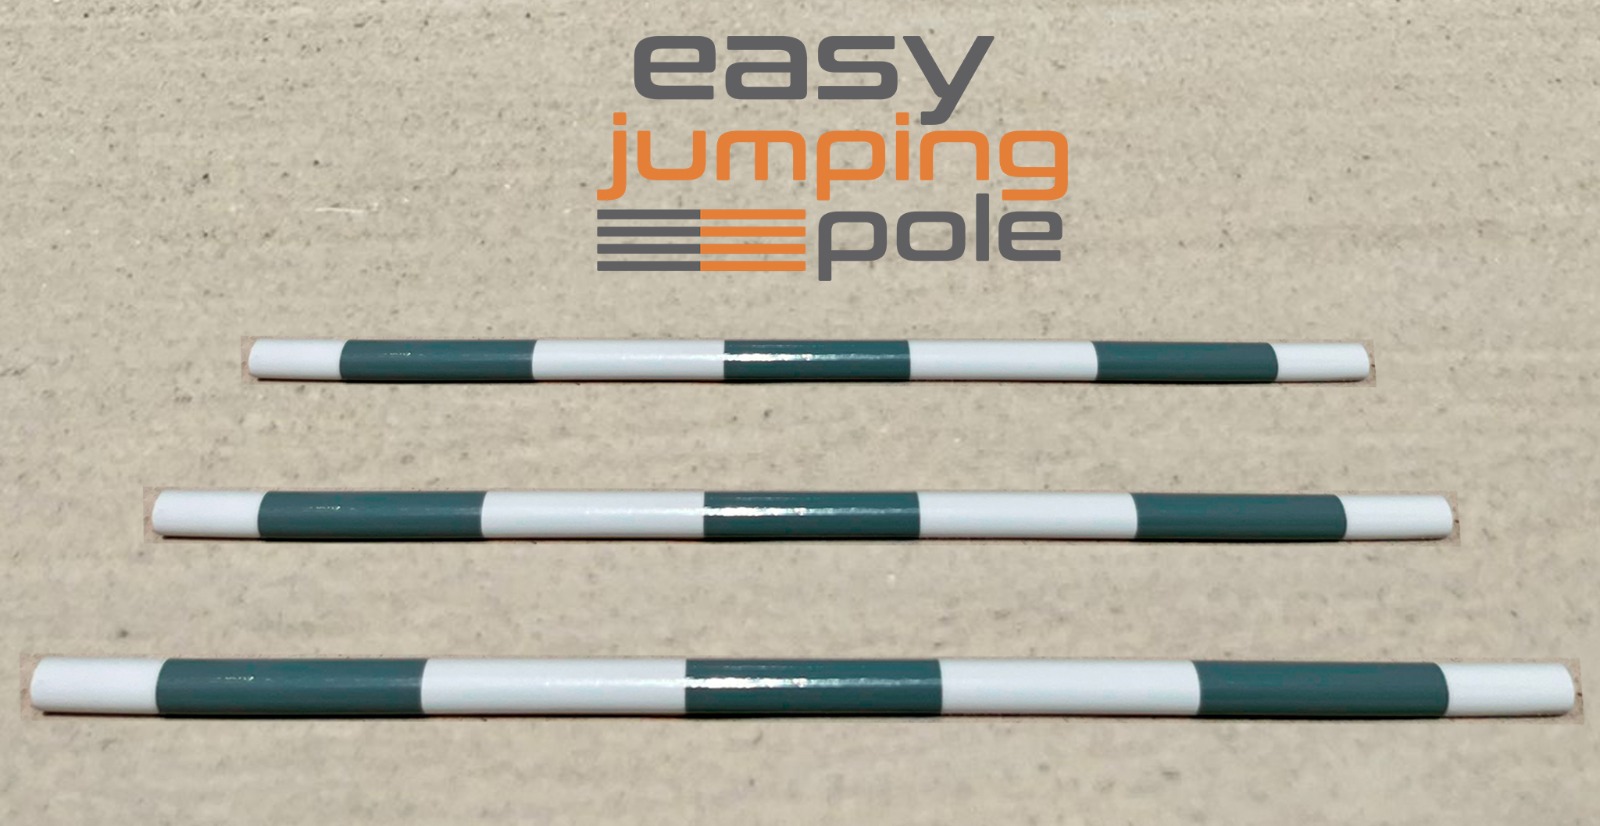 Easy jumping pole Model C-7